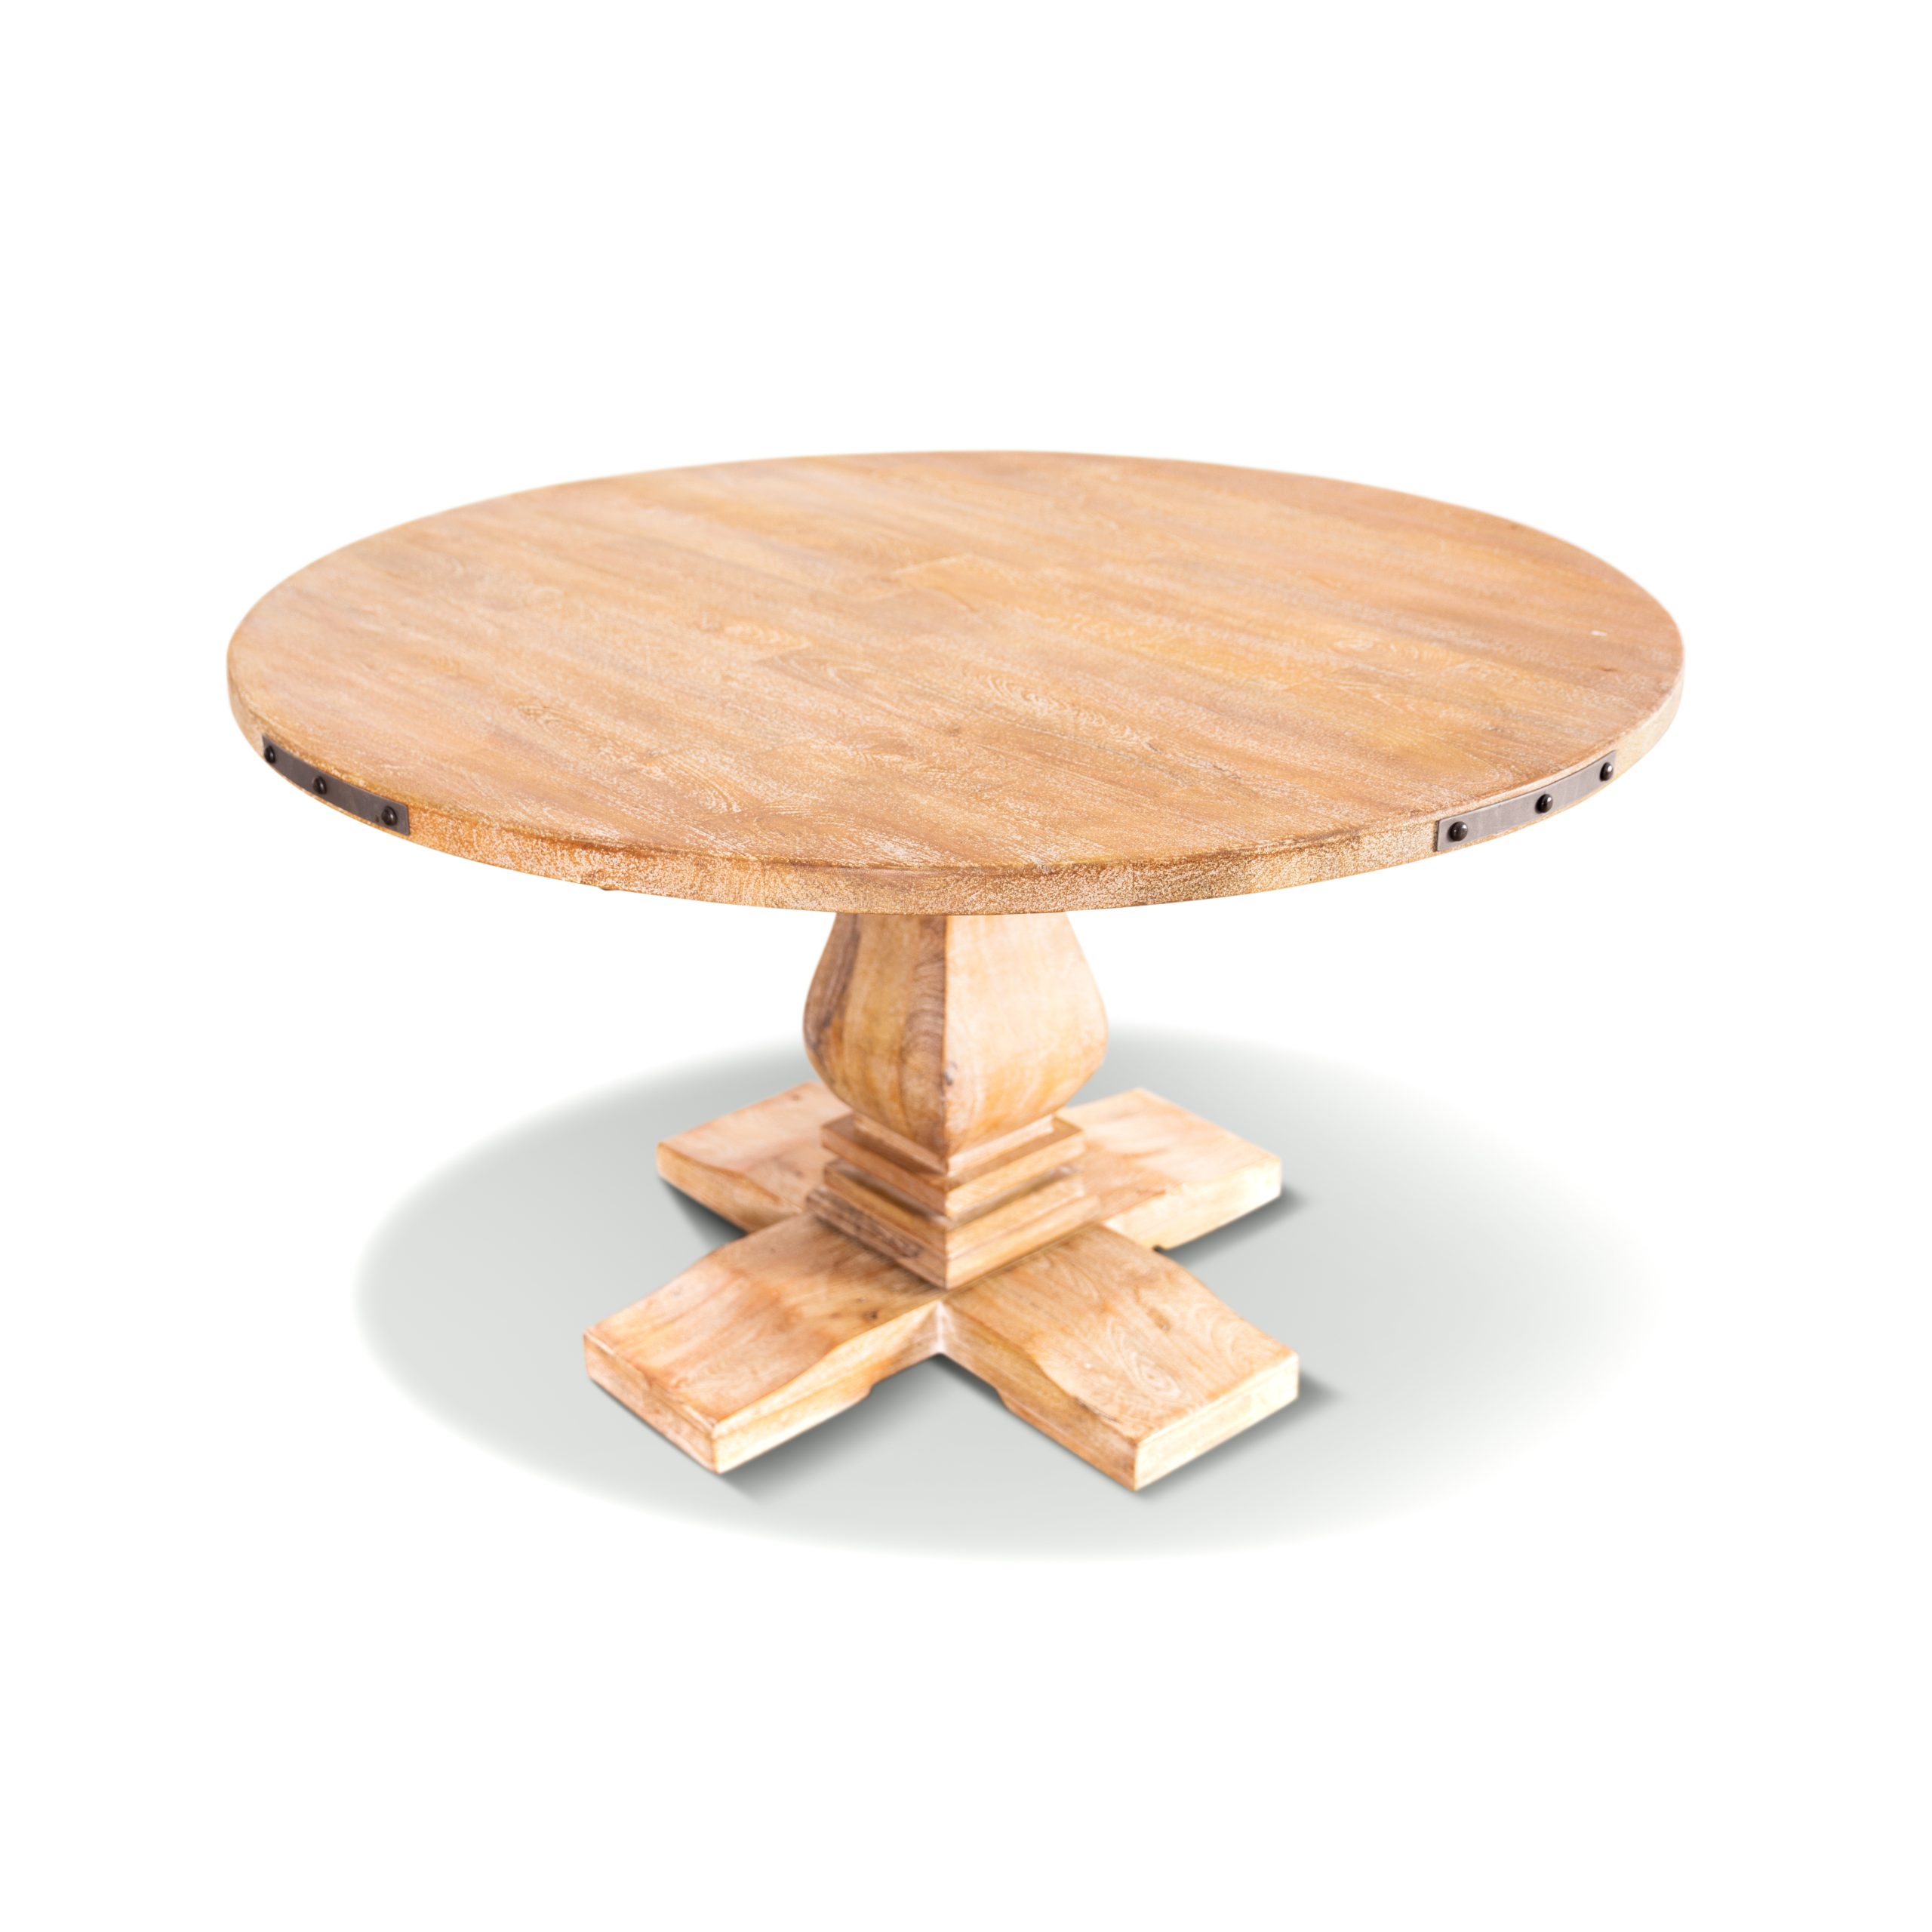 Gloriosa Round Dining Table 135cm Pedestal Solid Mango Timber Wood – Honey Wash